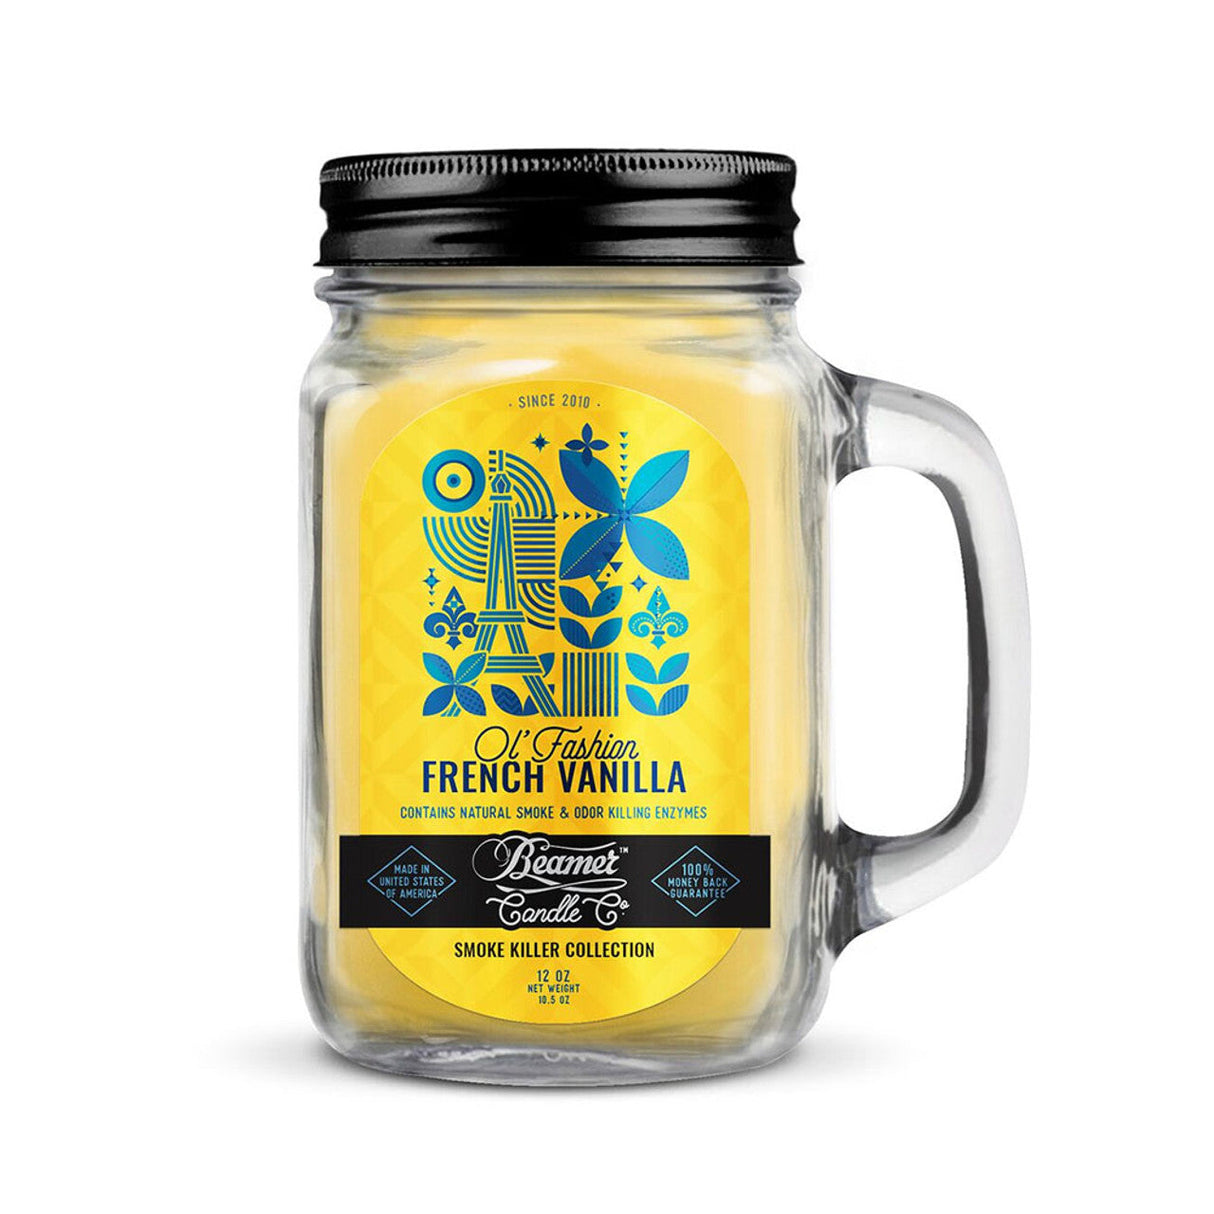 Beamer Candle Co. 12 oz French Vanilla Smoke Killer Candle in Glass Mason Jar